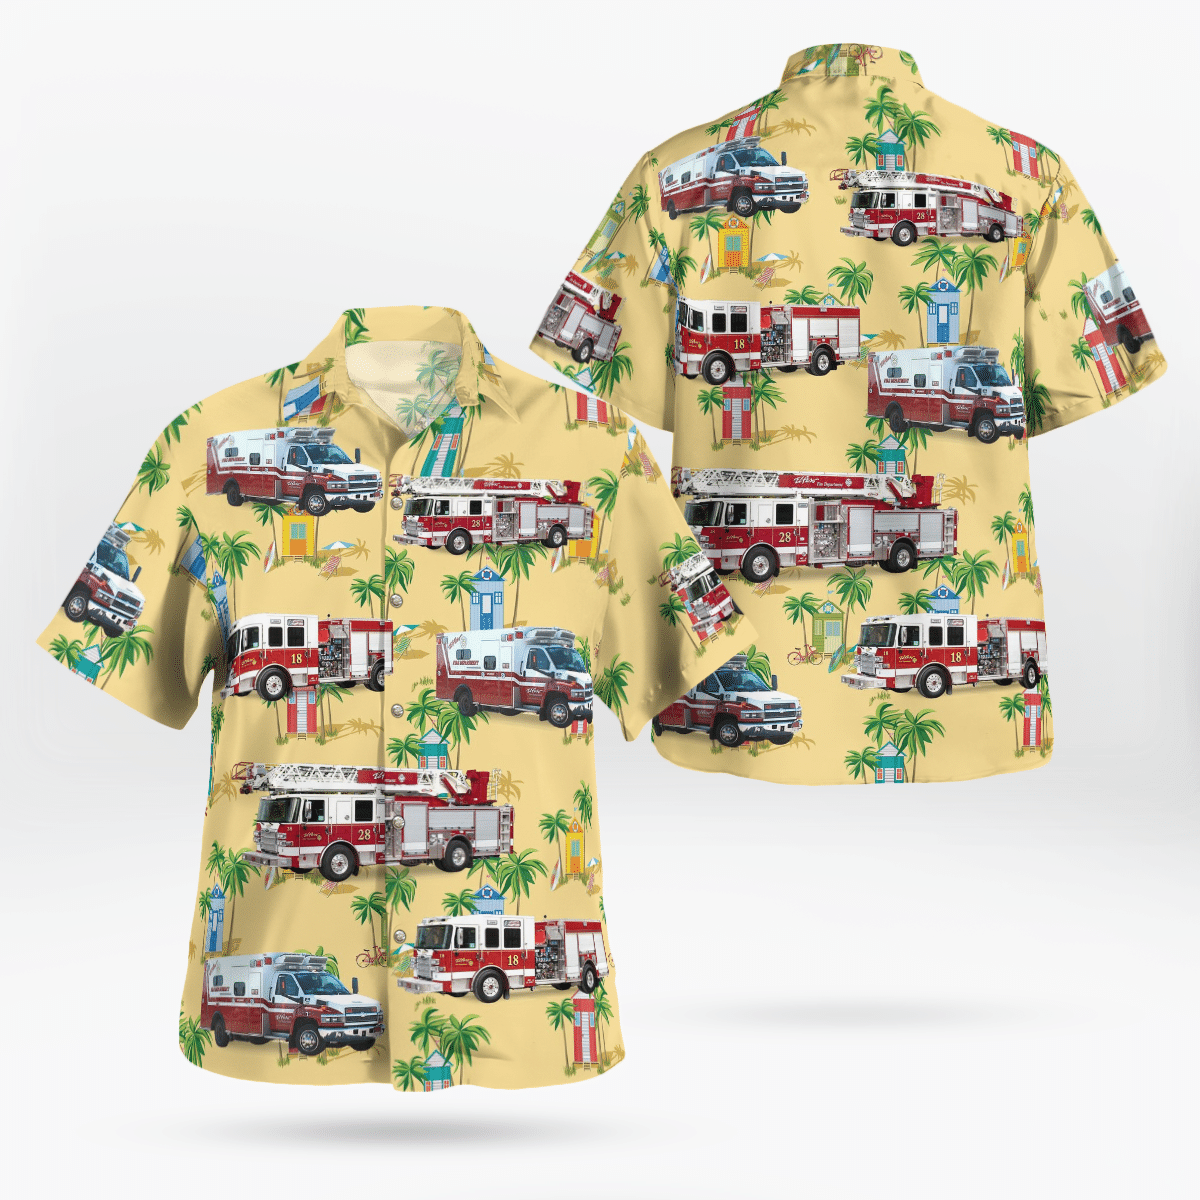 Listed below are some High-quality Aloha Shirt 387